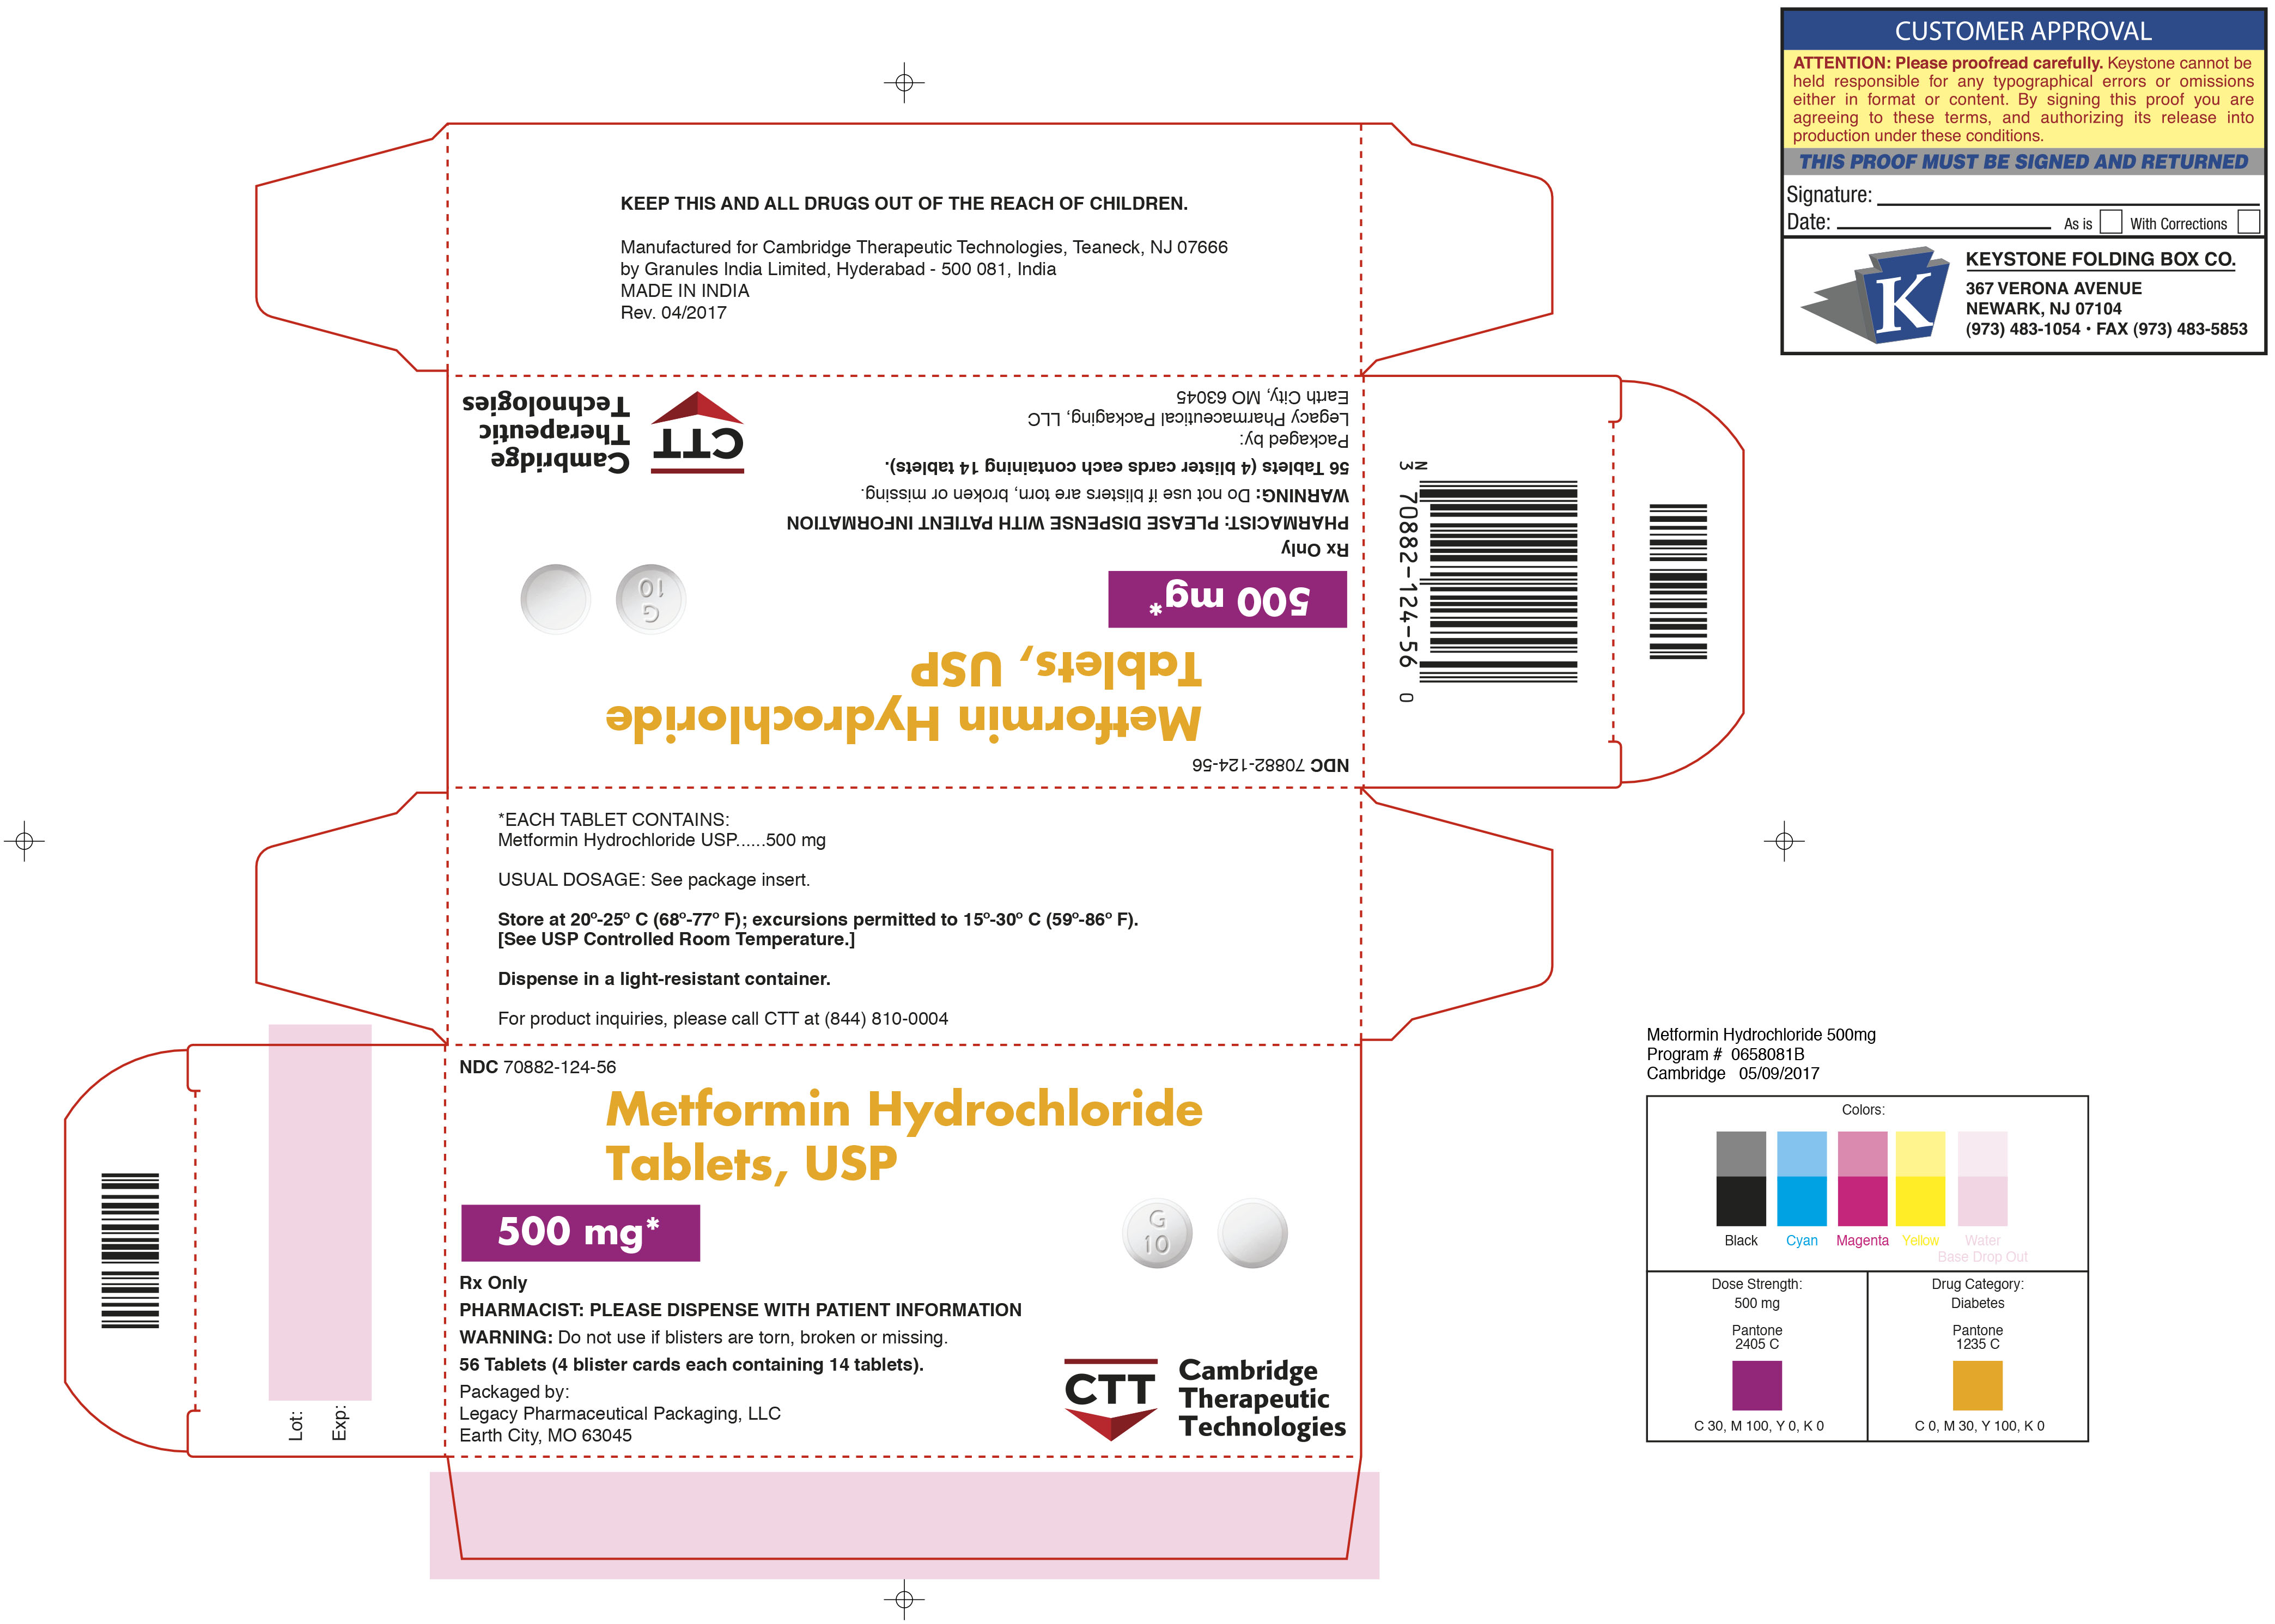 Metformin Hydrochloride Tablets, USP 500 mg